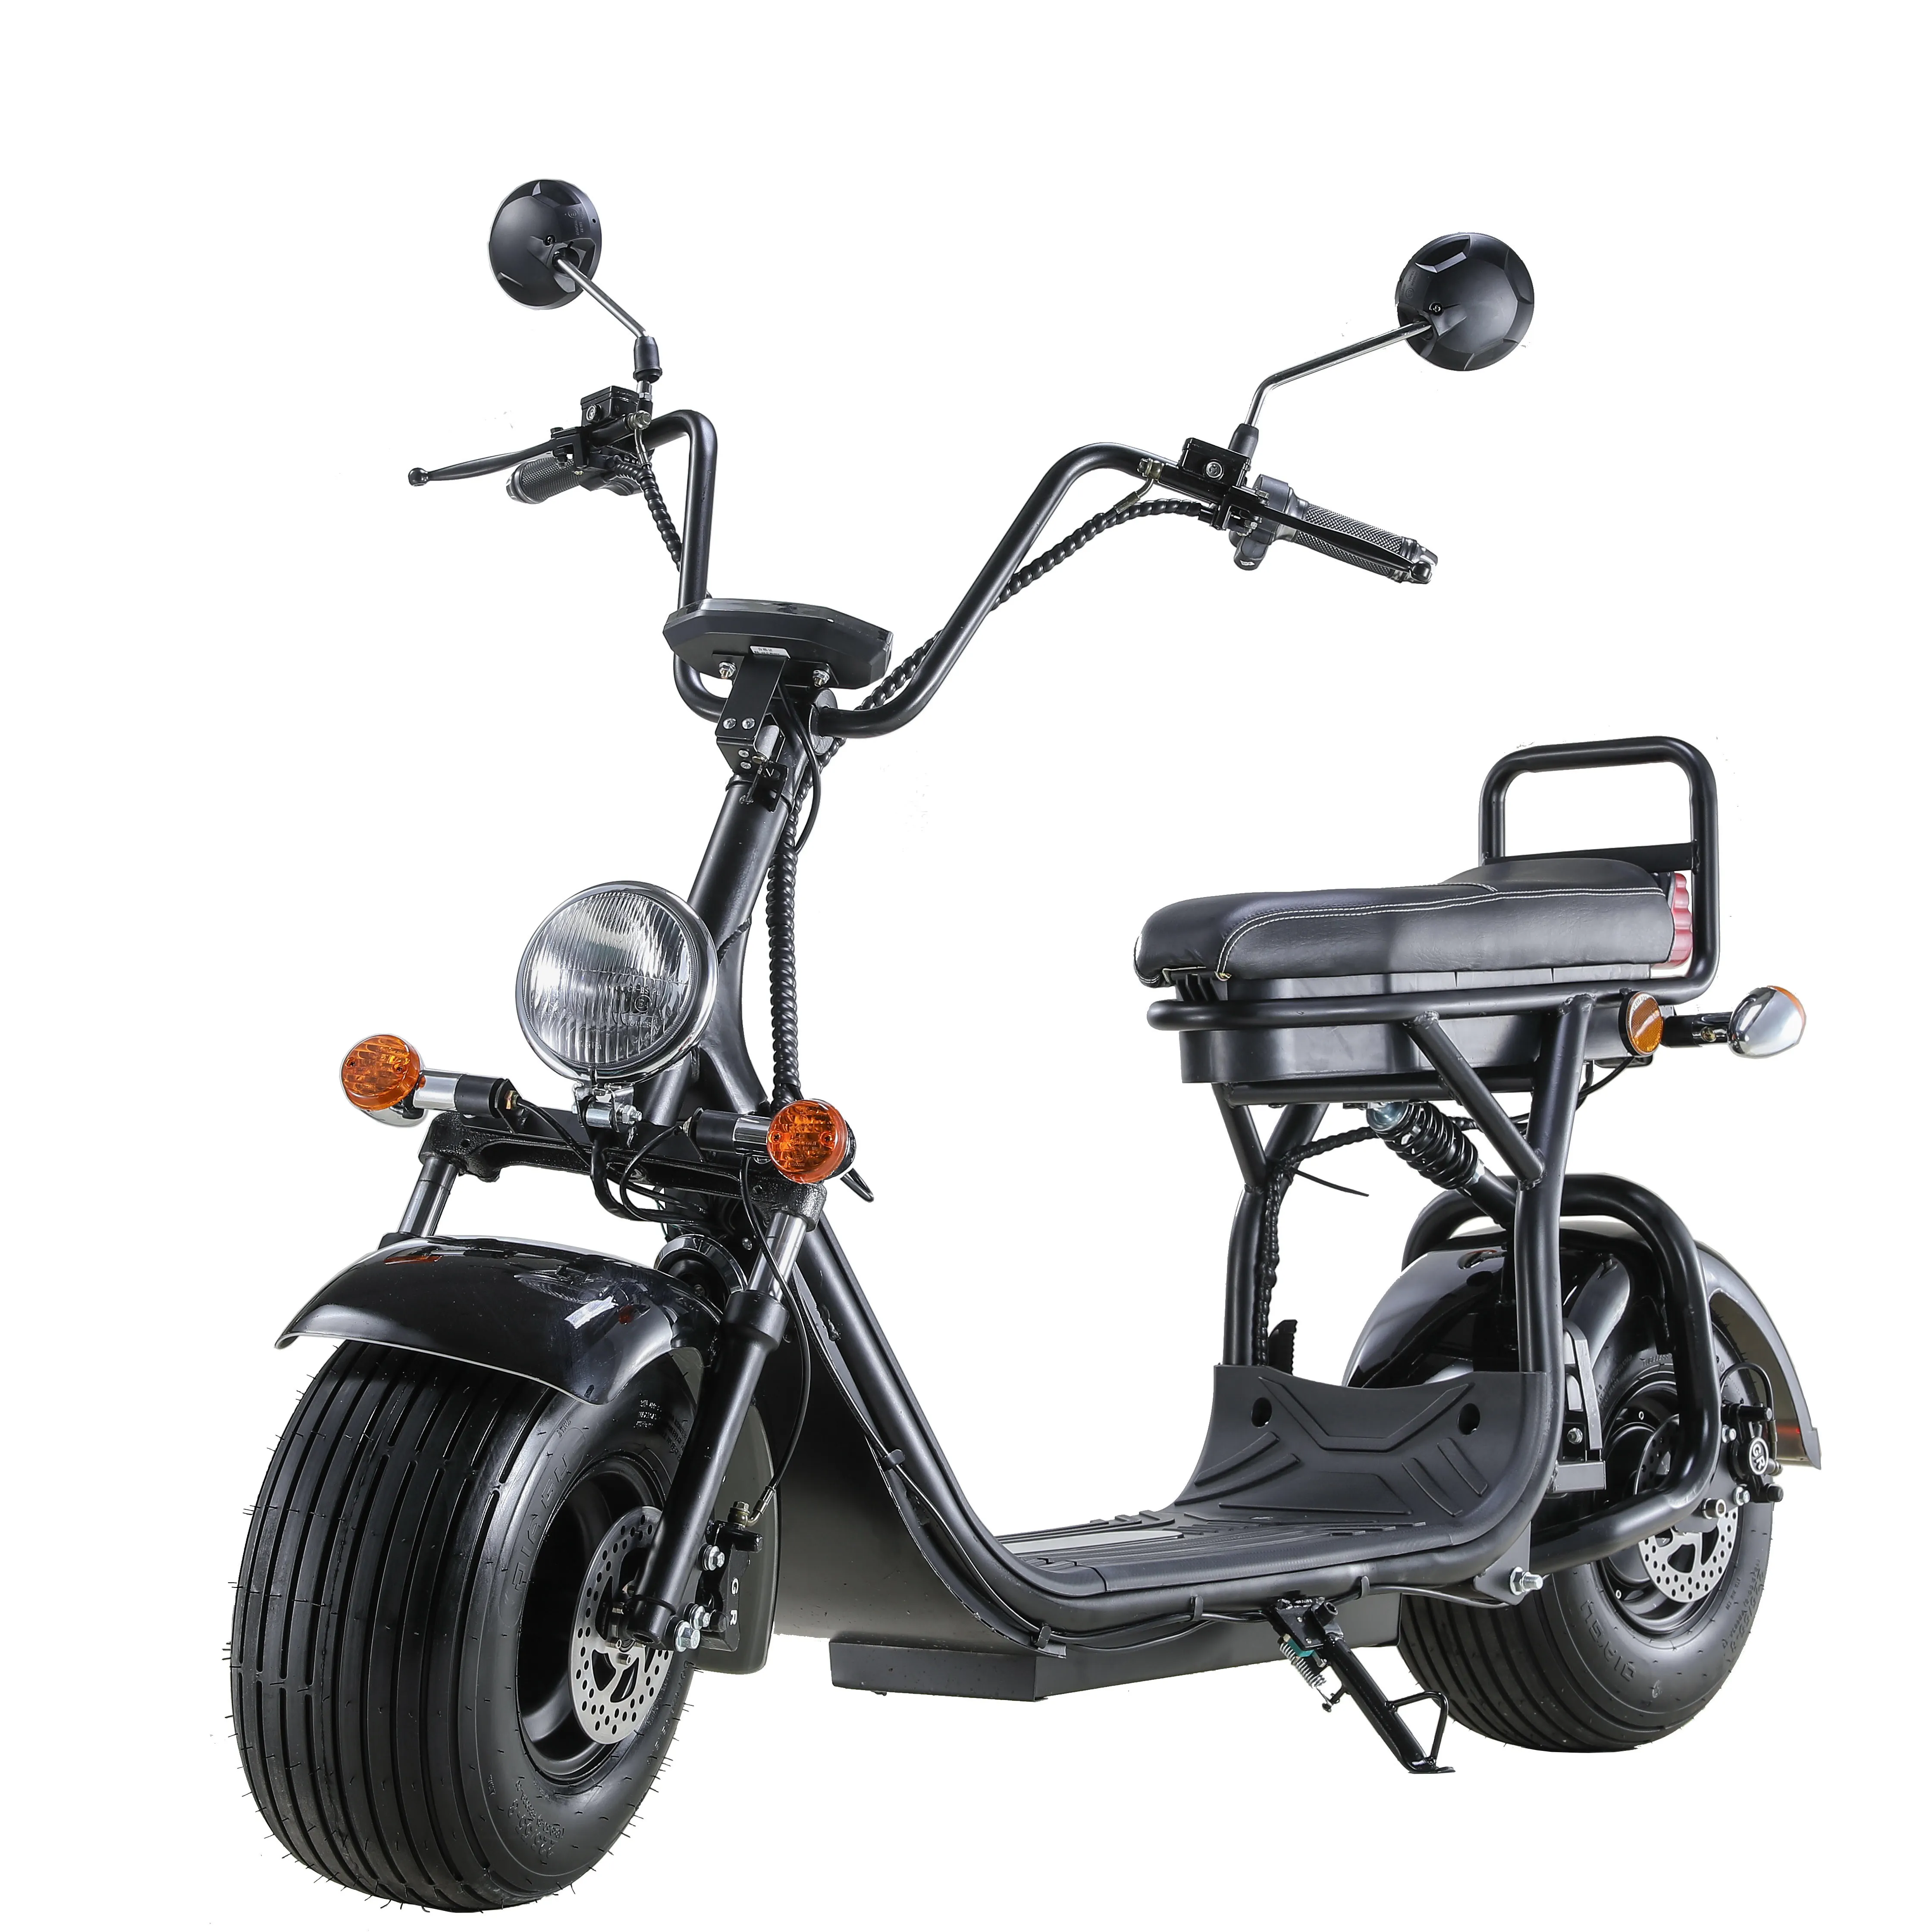 Casco Motocicleta Choope Motorrad/Fahrrad/Citycoco/Eletric Roller/Bike shell prototyp